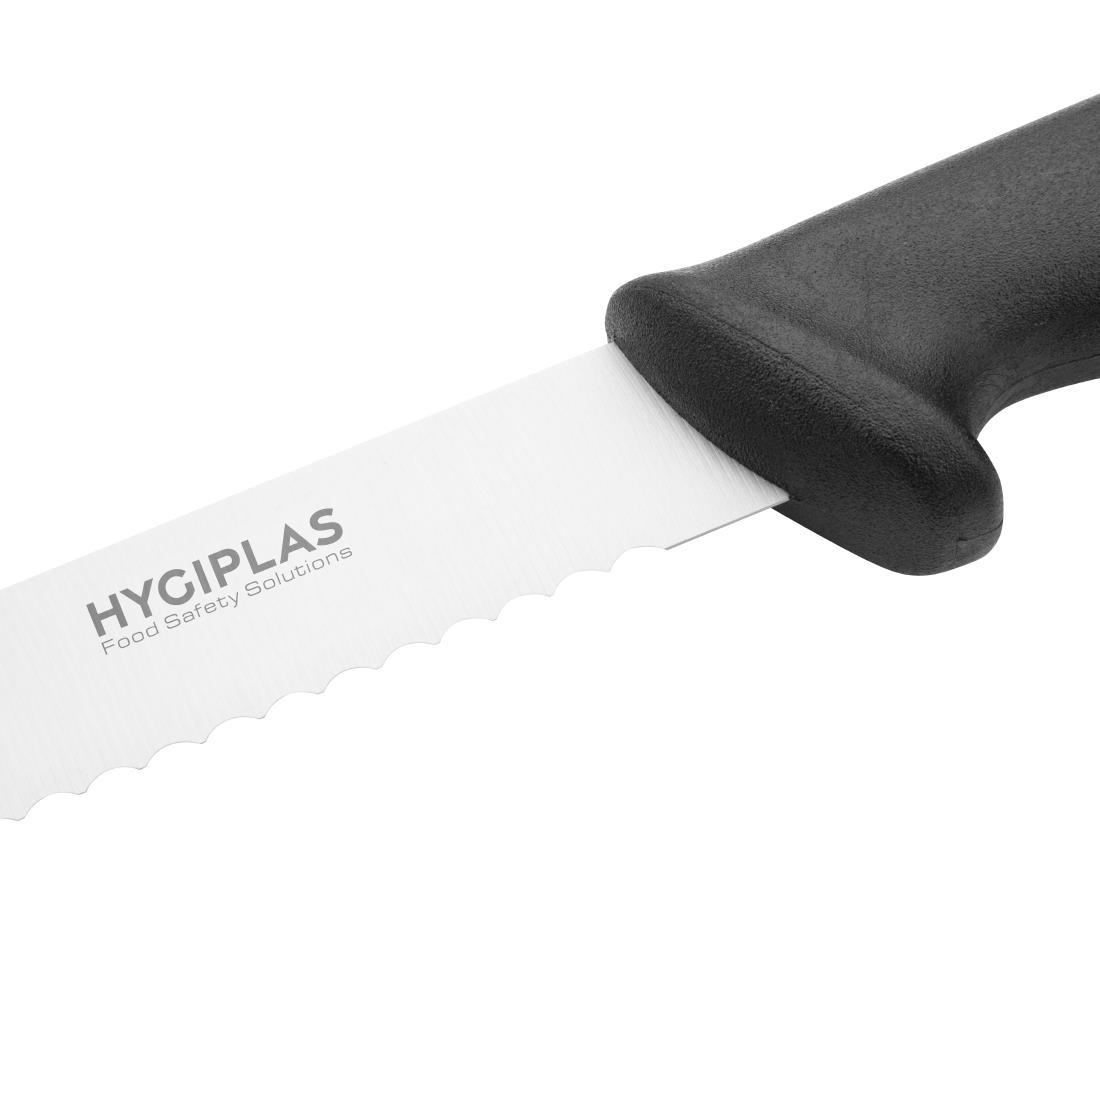 Hygiplas Serrated Pastry Knife Black 25.5cm - CF895  - 3